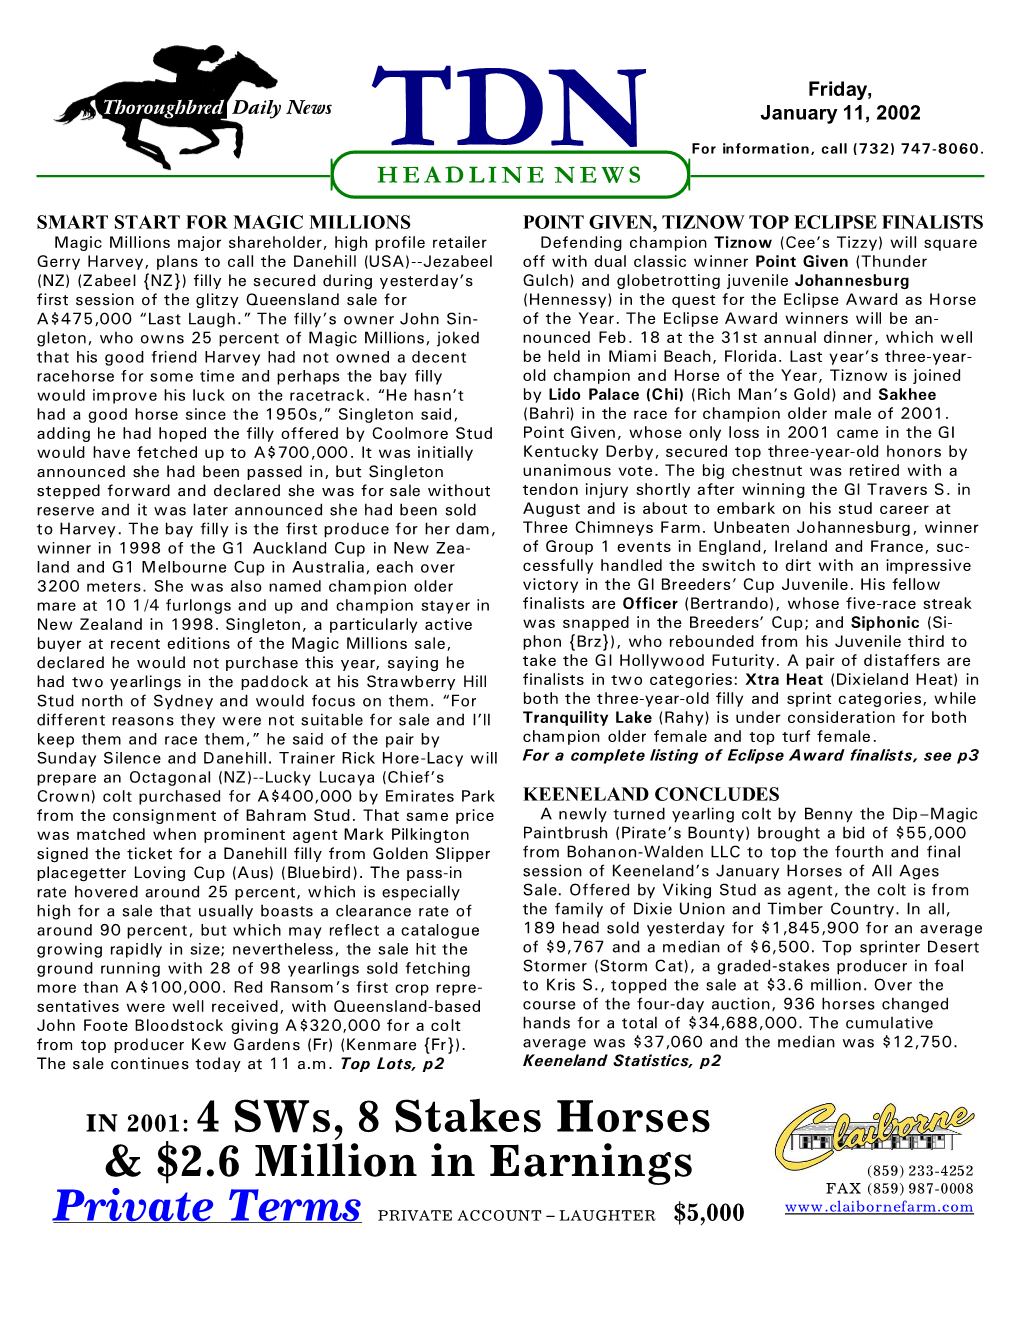 4 Sws, 8 Stakes Horses & $2.6 Million in Earnings